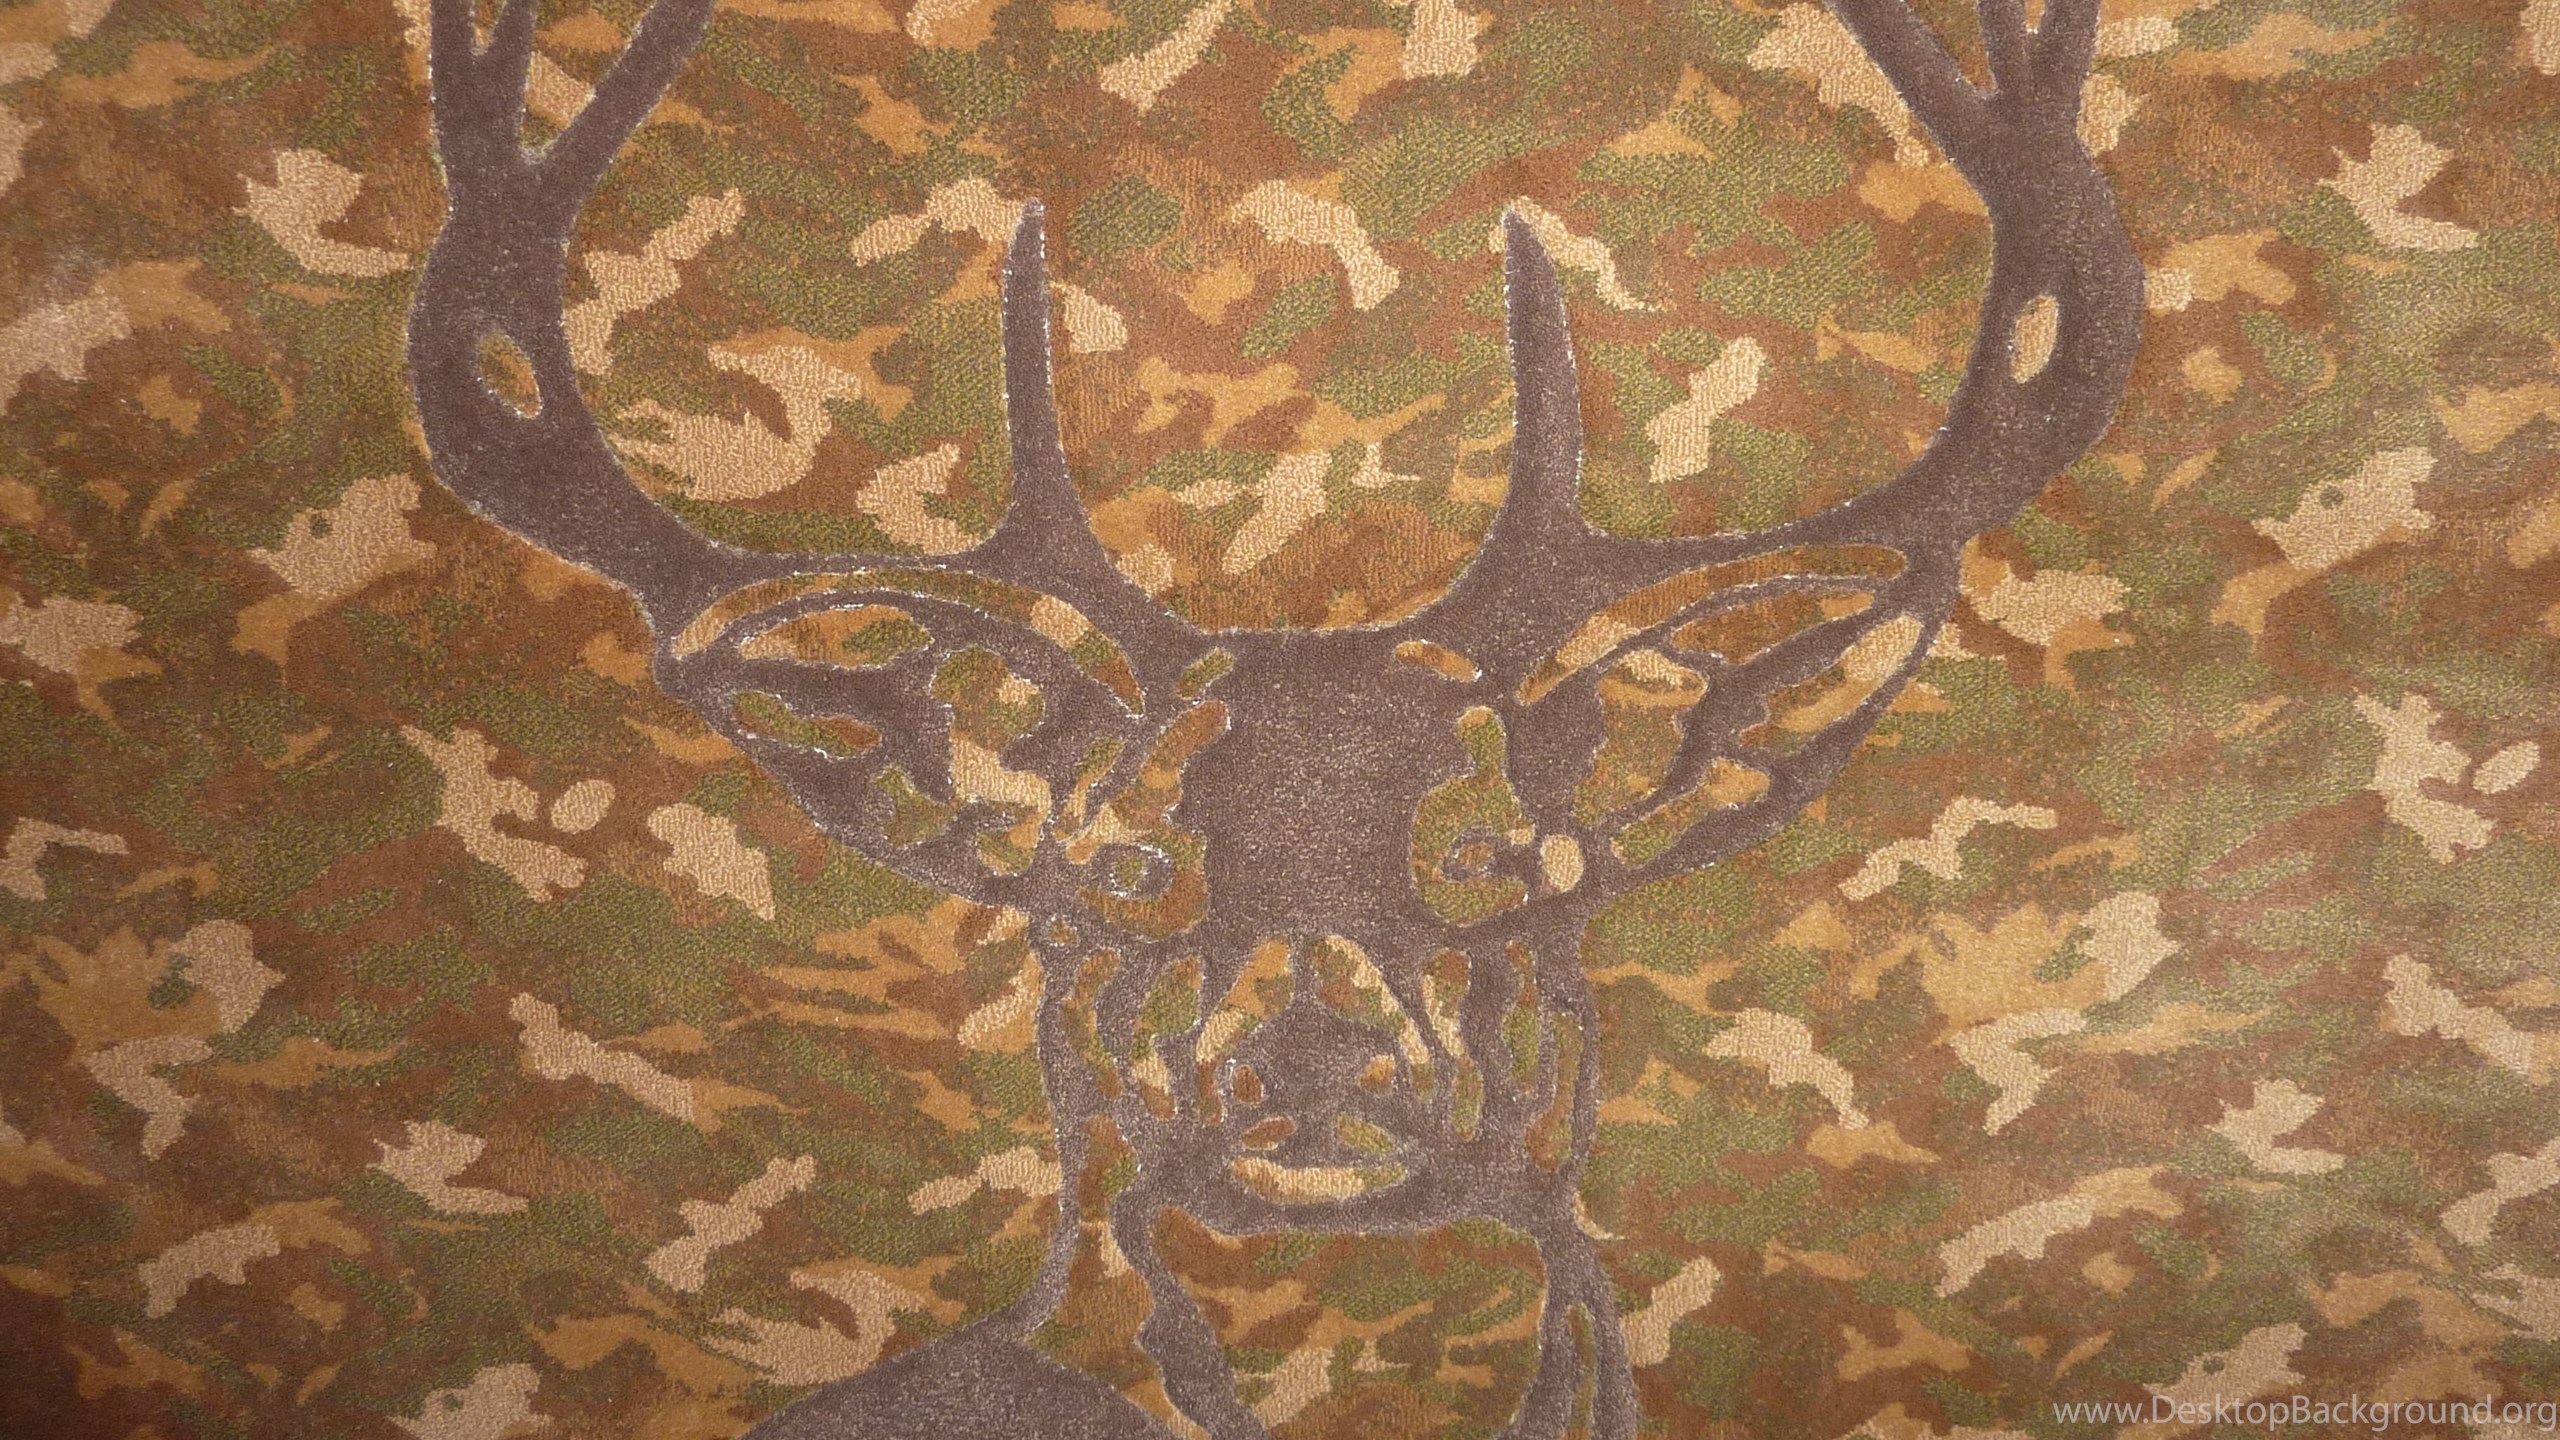 Cool Bow Hunting Deer Wallpaper, Deer Hunting Camo Desktop Background